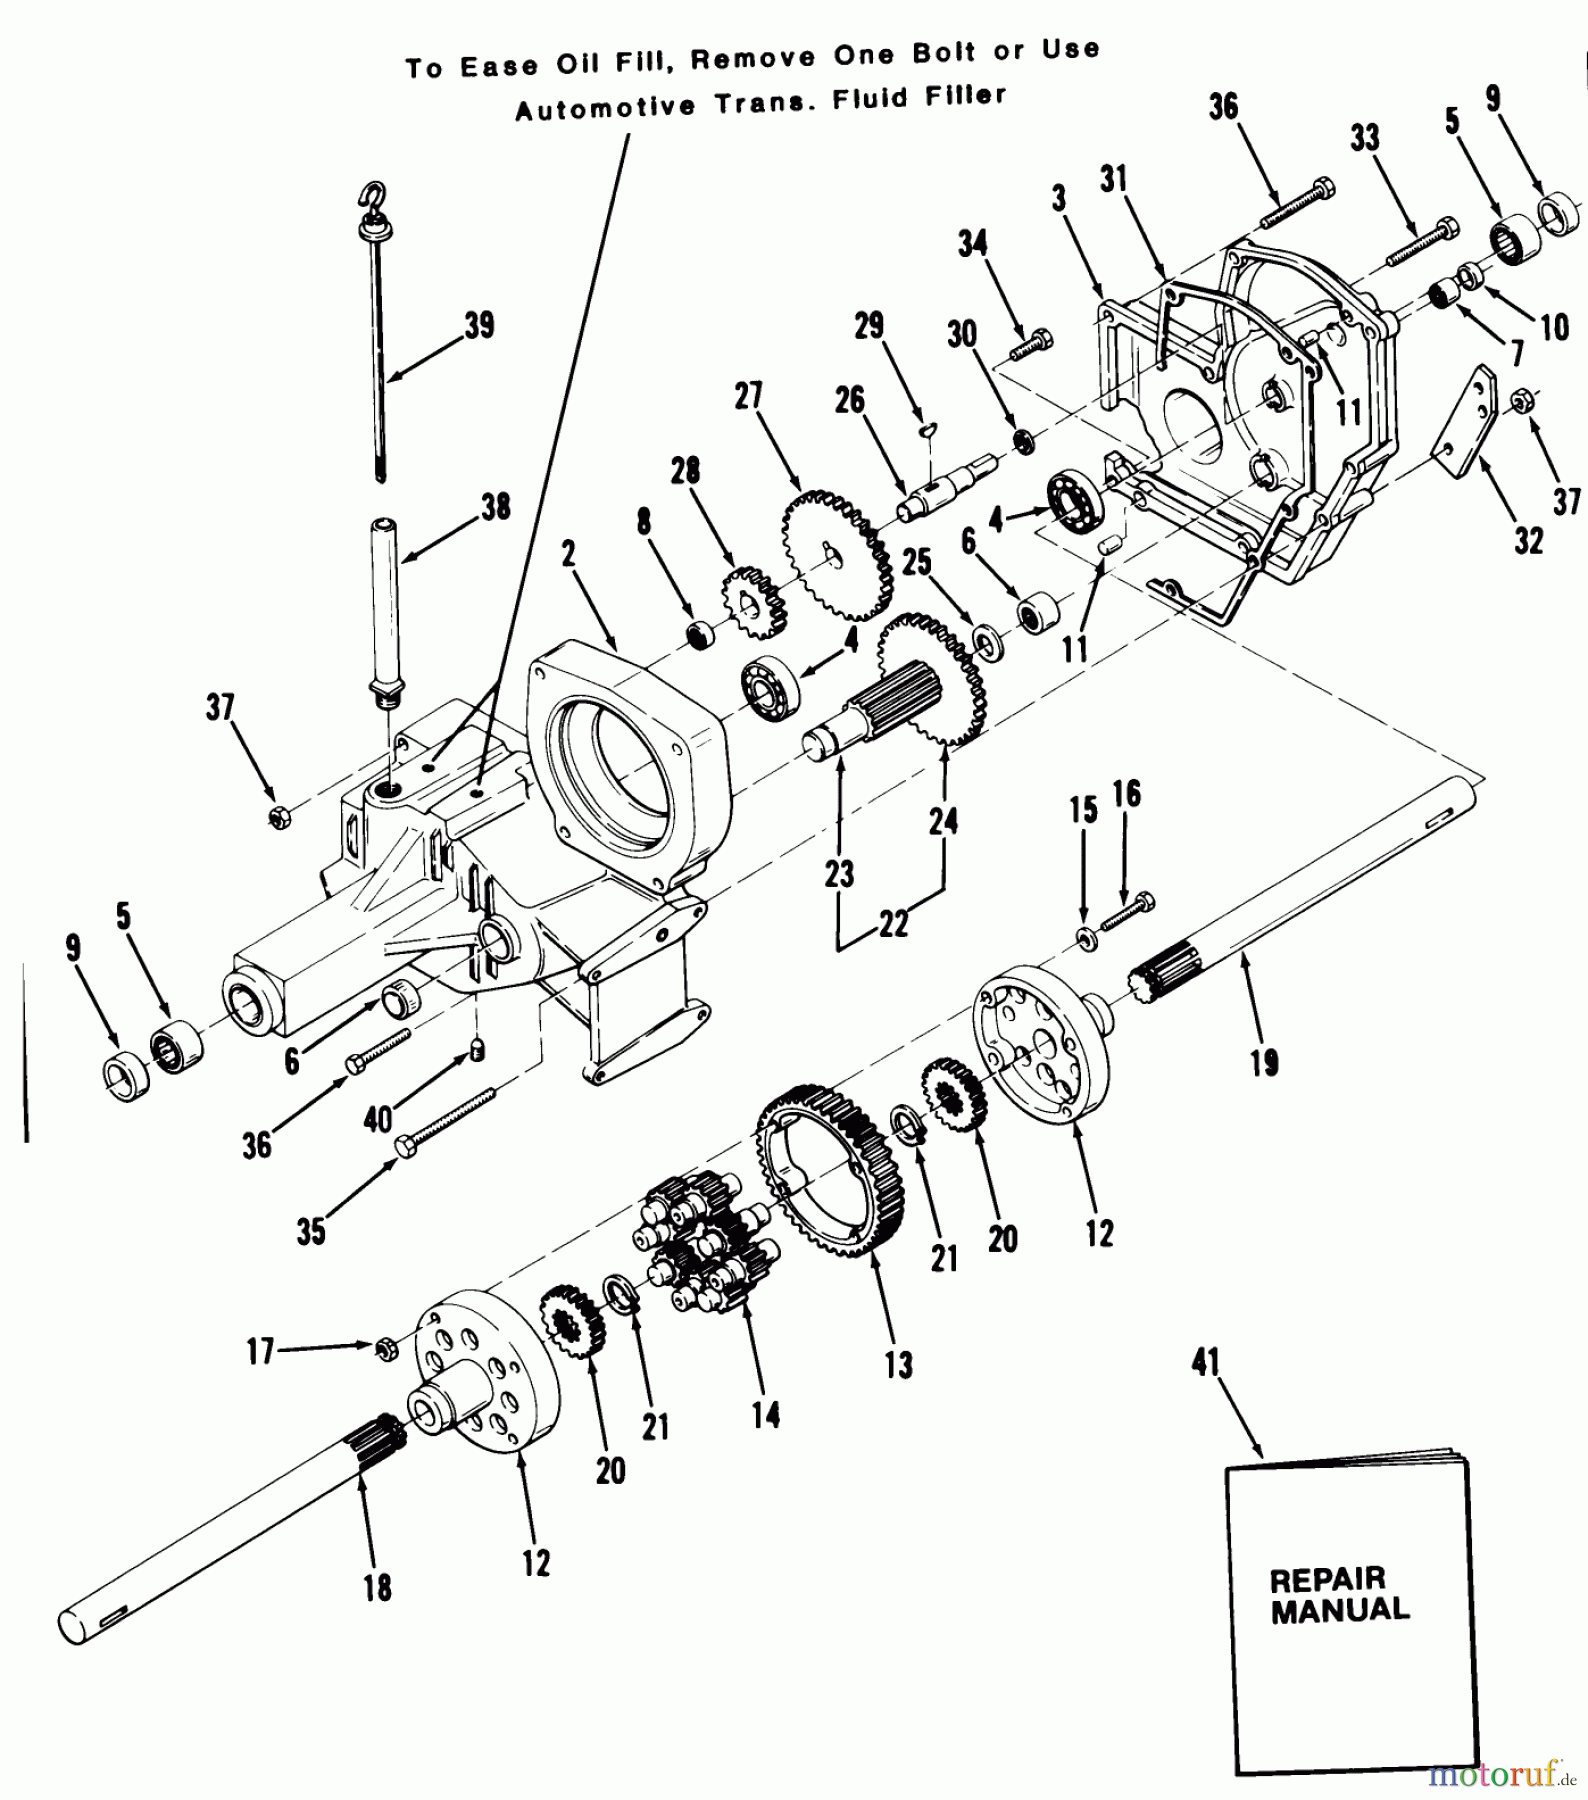  Toro Neu Mowers, Lawn & Garden Tractor Seite 1 11-16K801 (C-165) - Toro C-165 8-Speed Tractor, 1984 TRANSAXLE